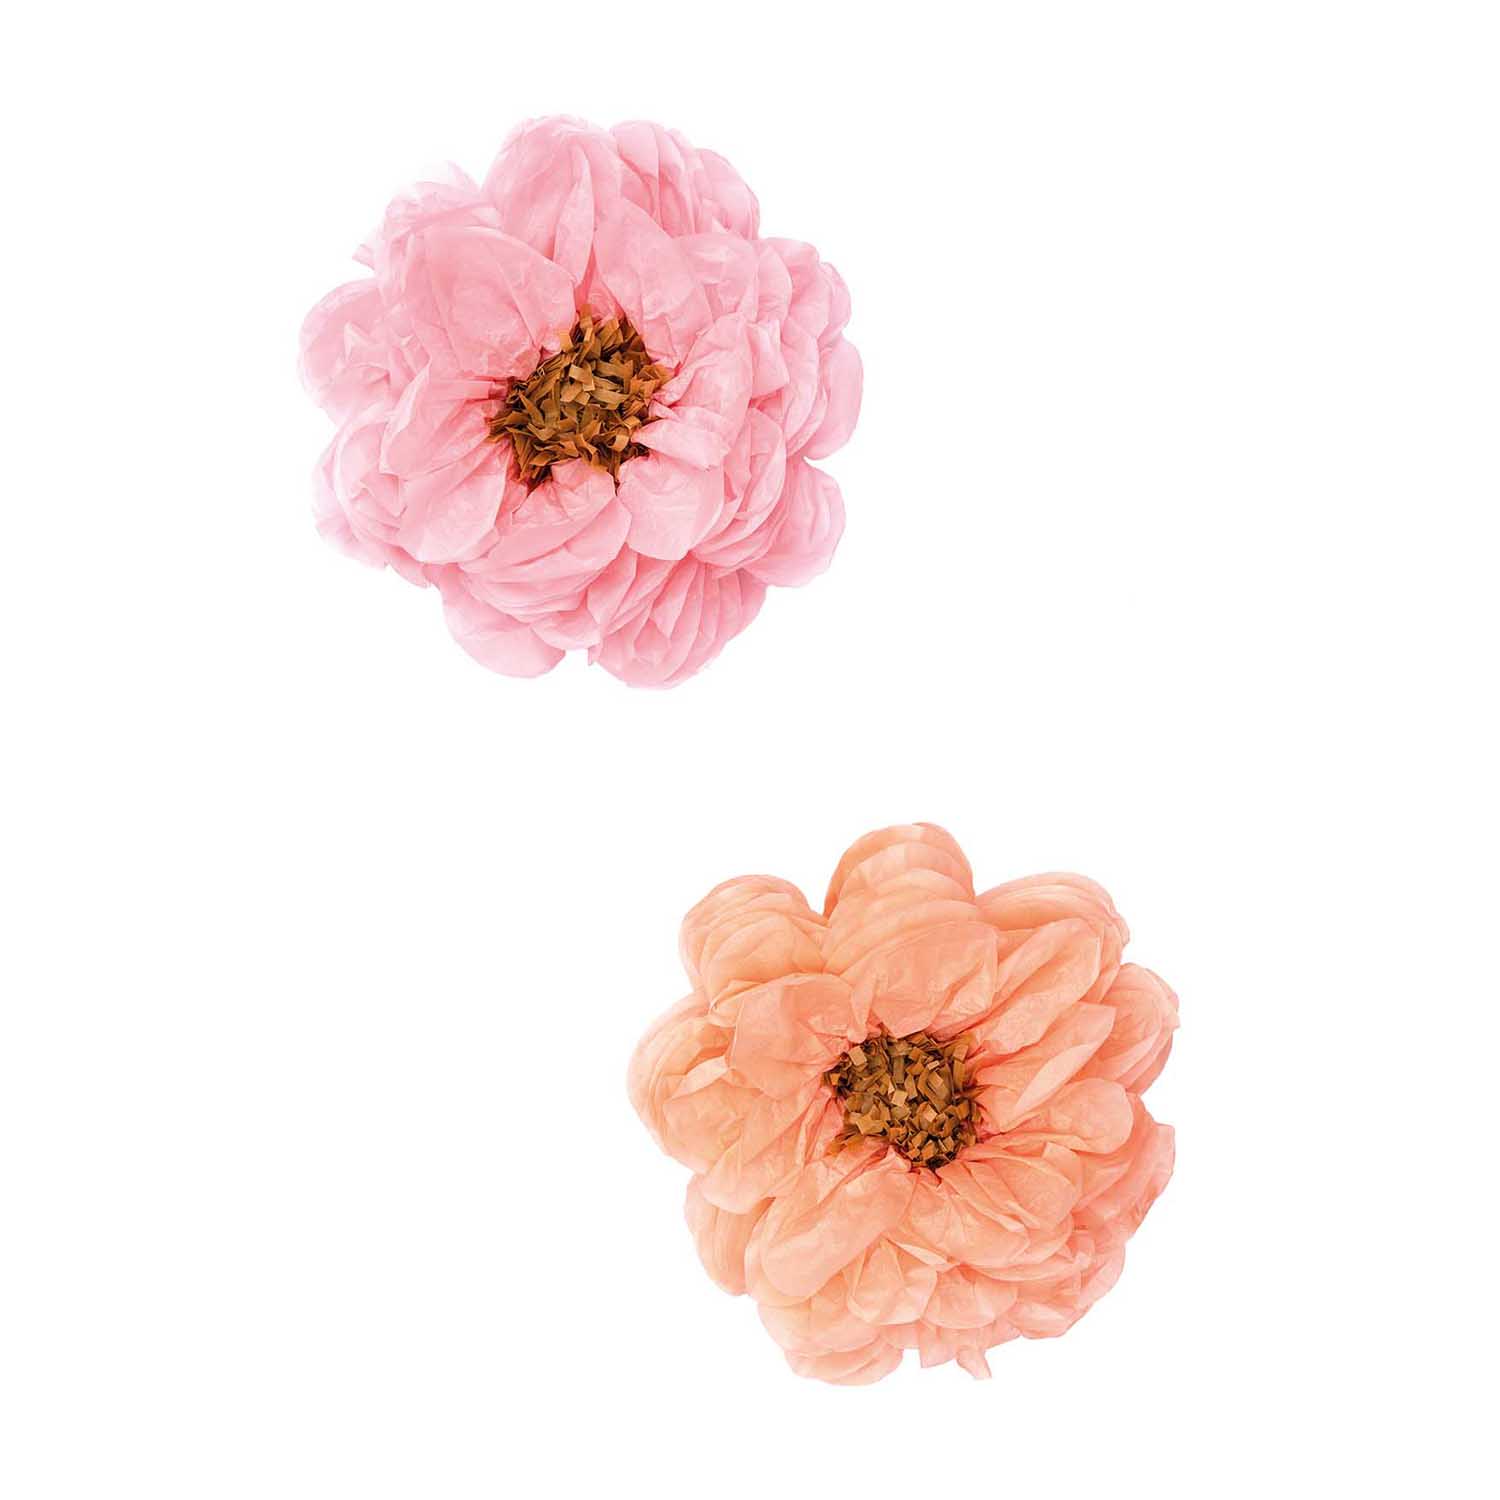 Tissue papier bloemen zacht roze en zacht oranje (Ø 25cm)